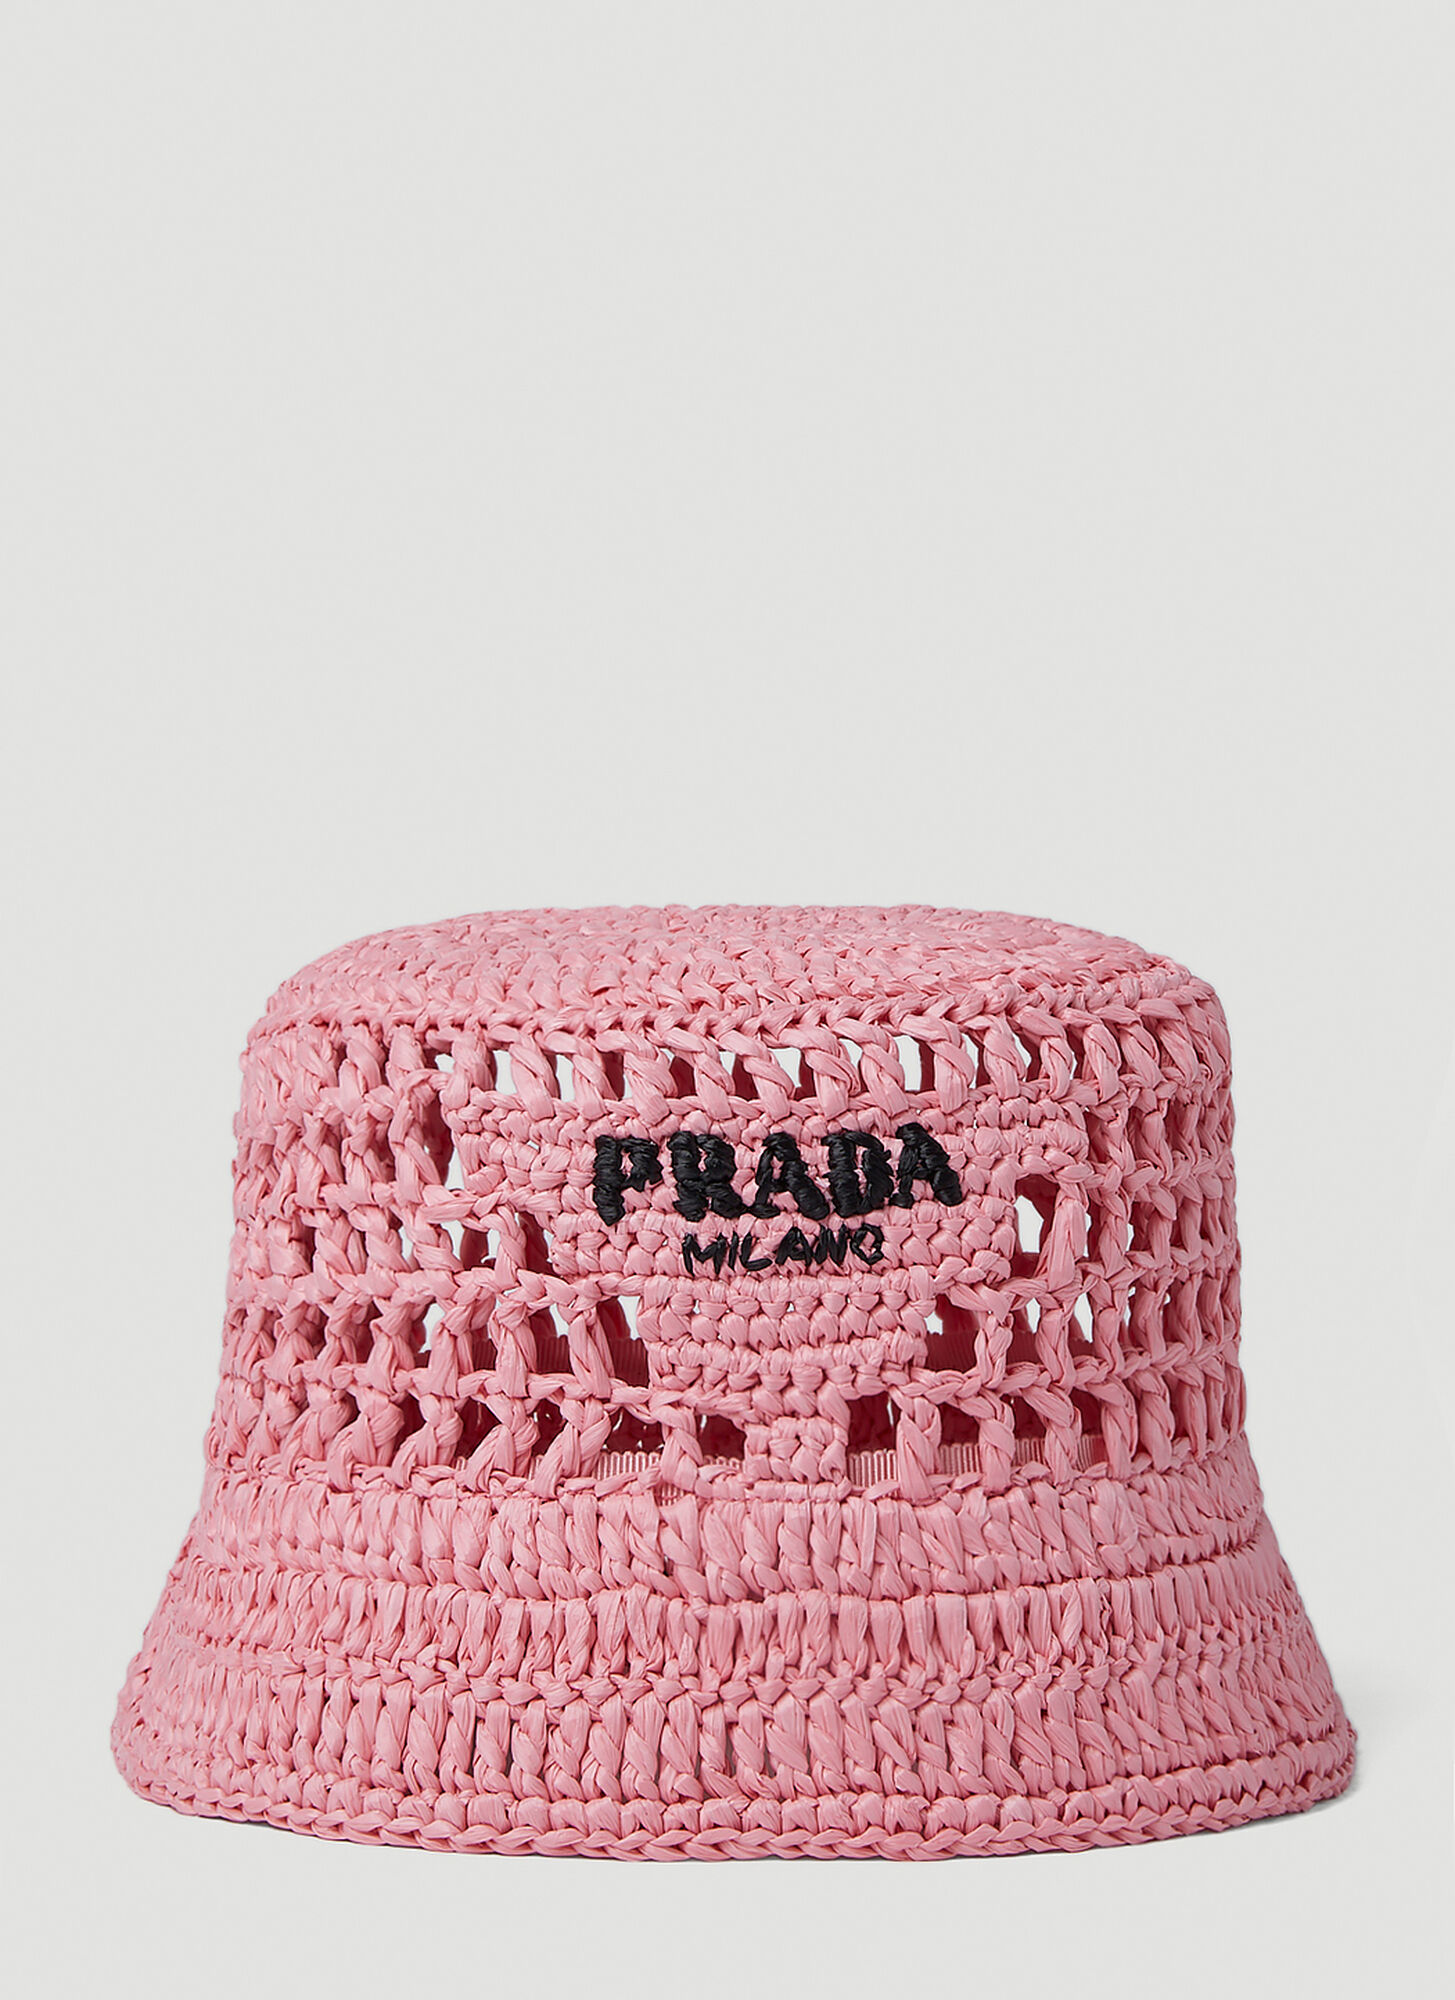 Prada Check Crochet Bucket Hat in Pink